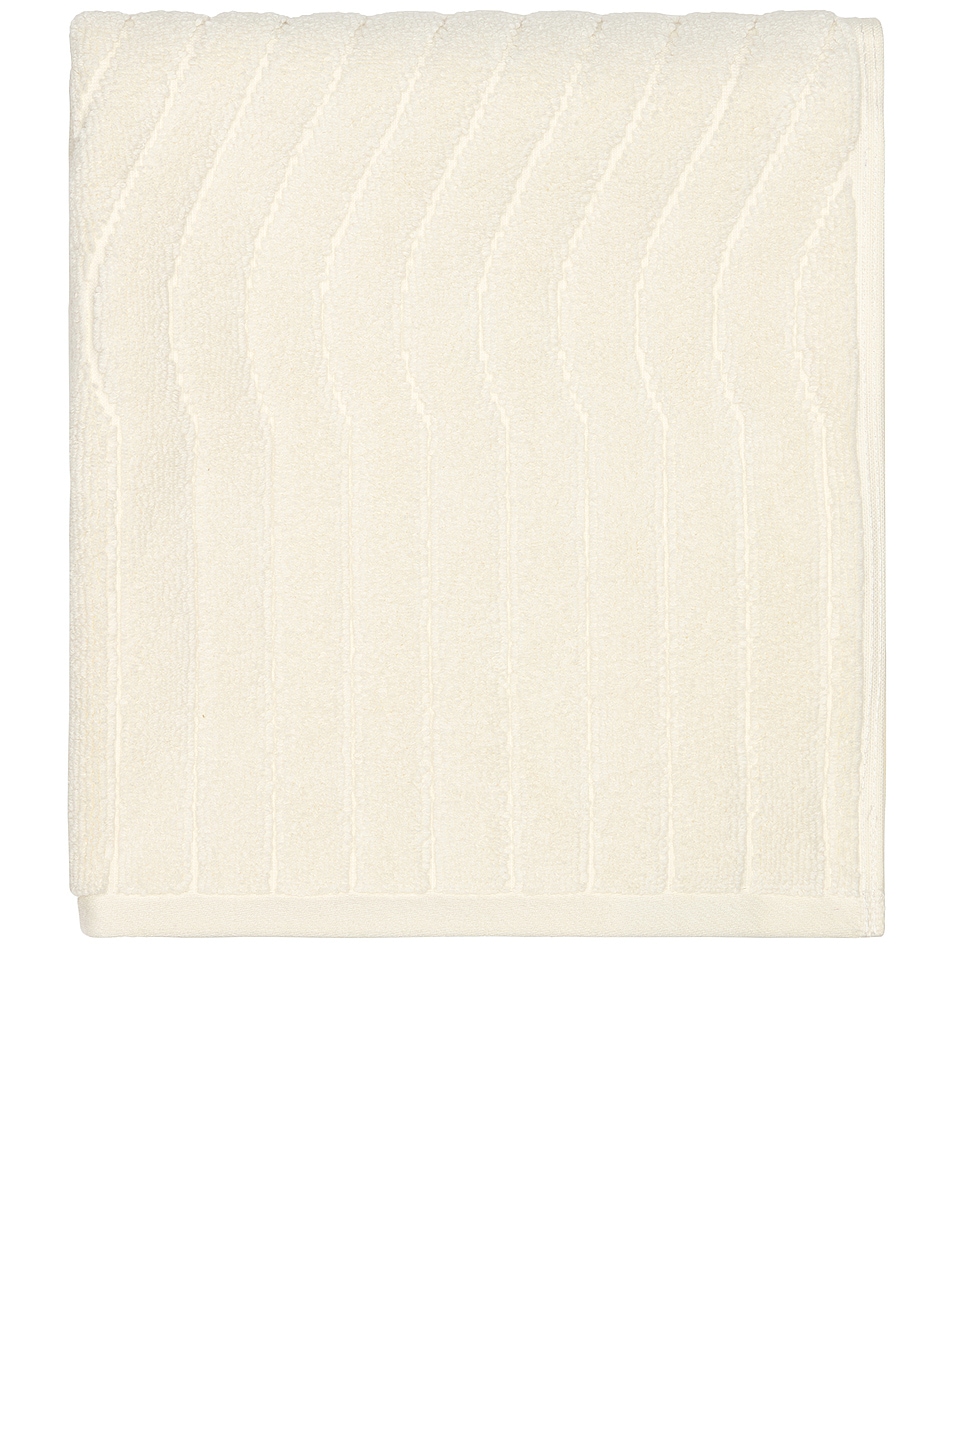 Image 1 of BAINA Bath Mat in Ivory